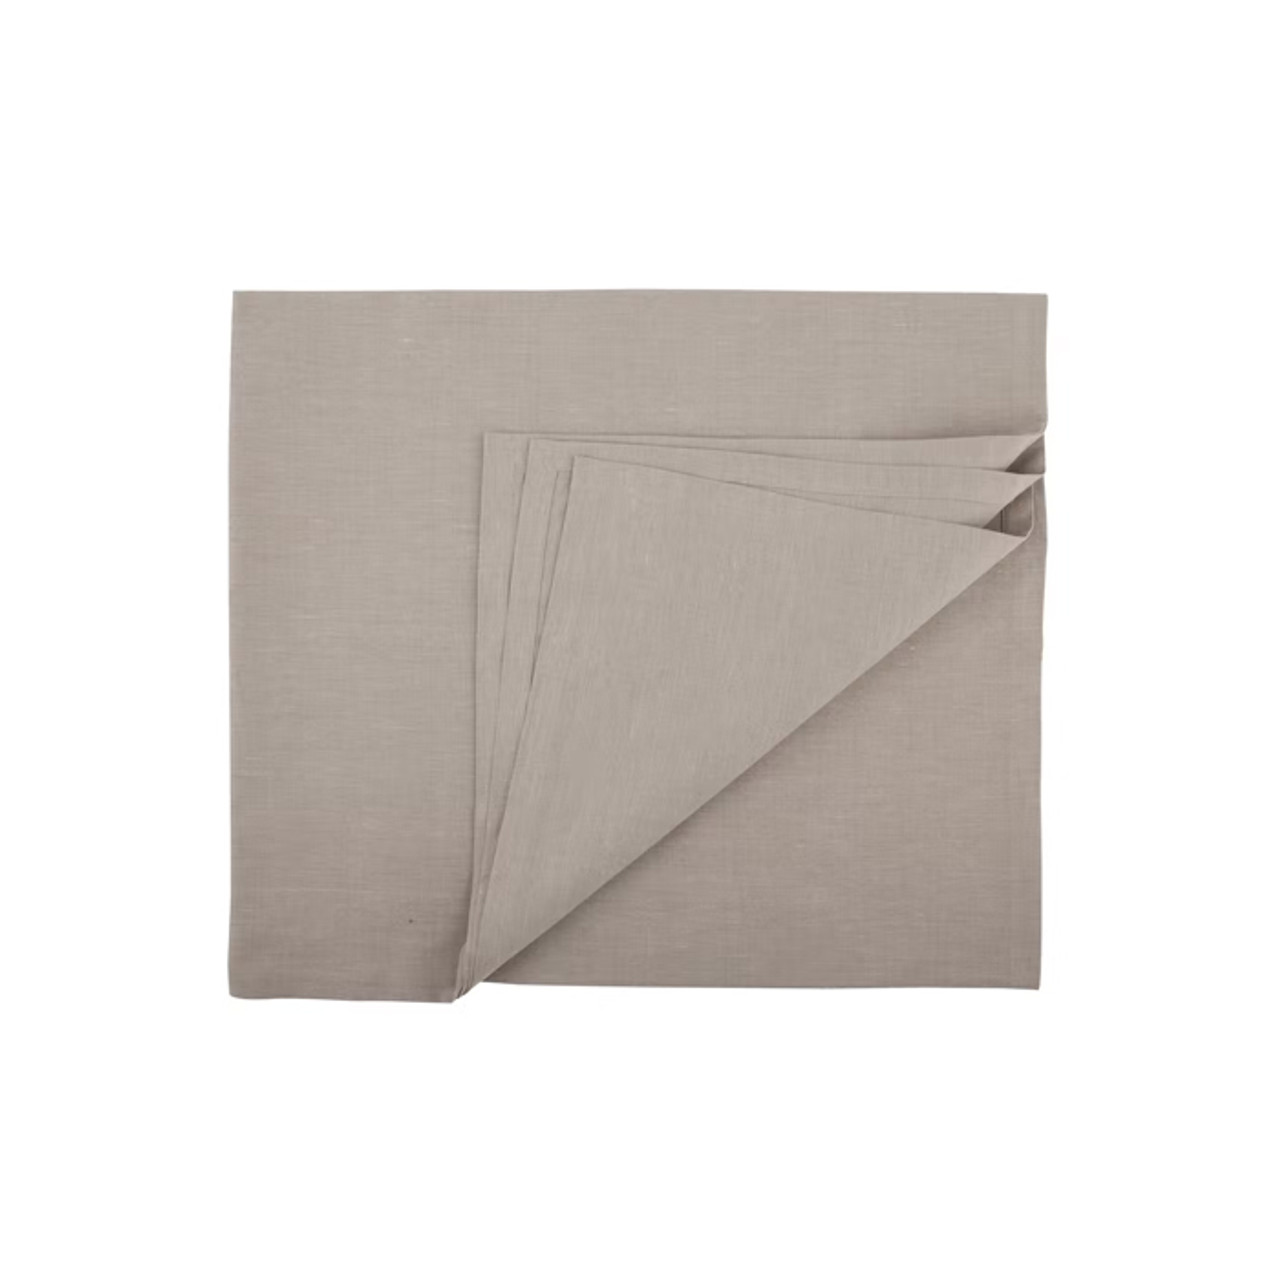 Phills Tablecloth, Flax, 142x250cm